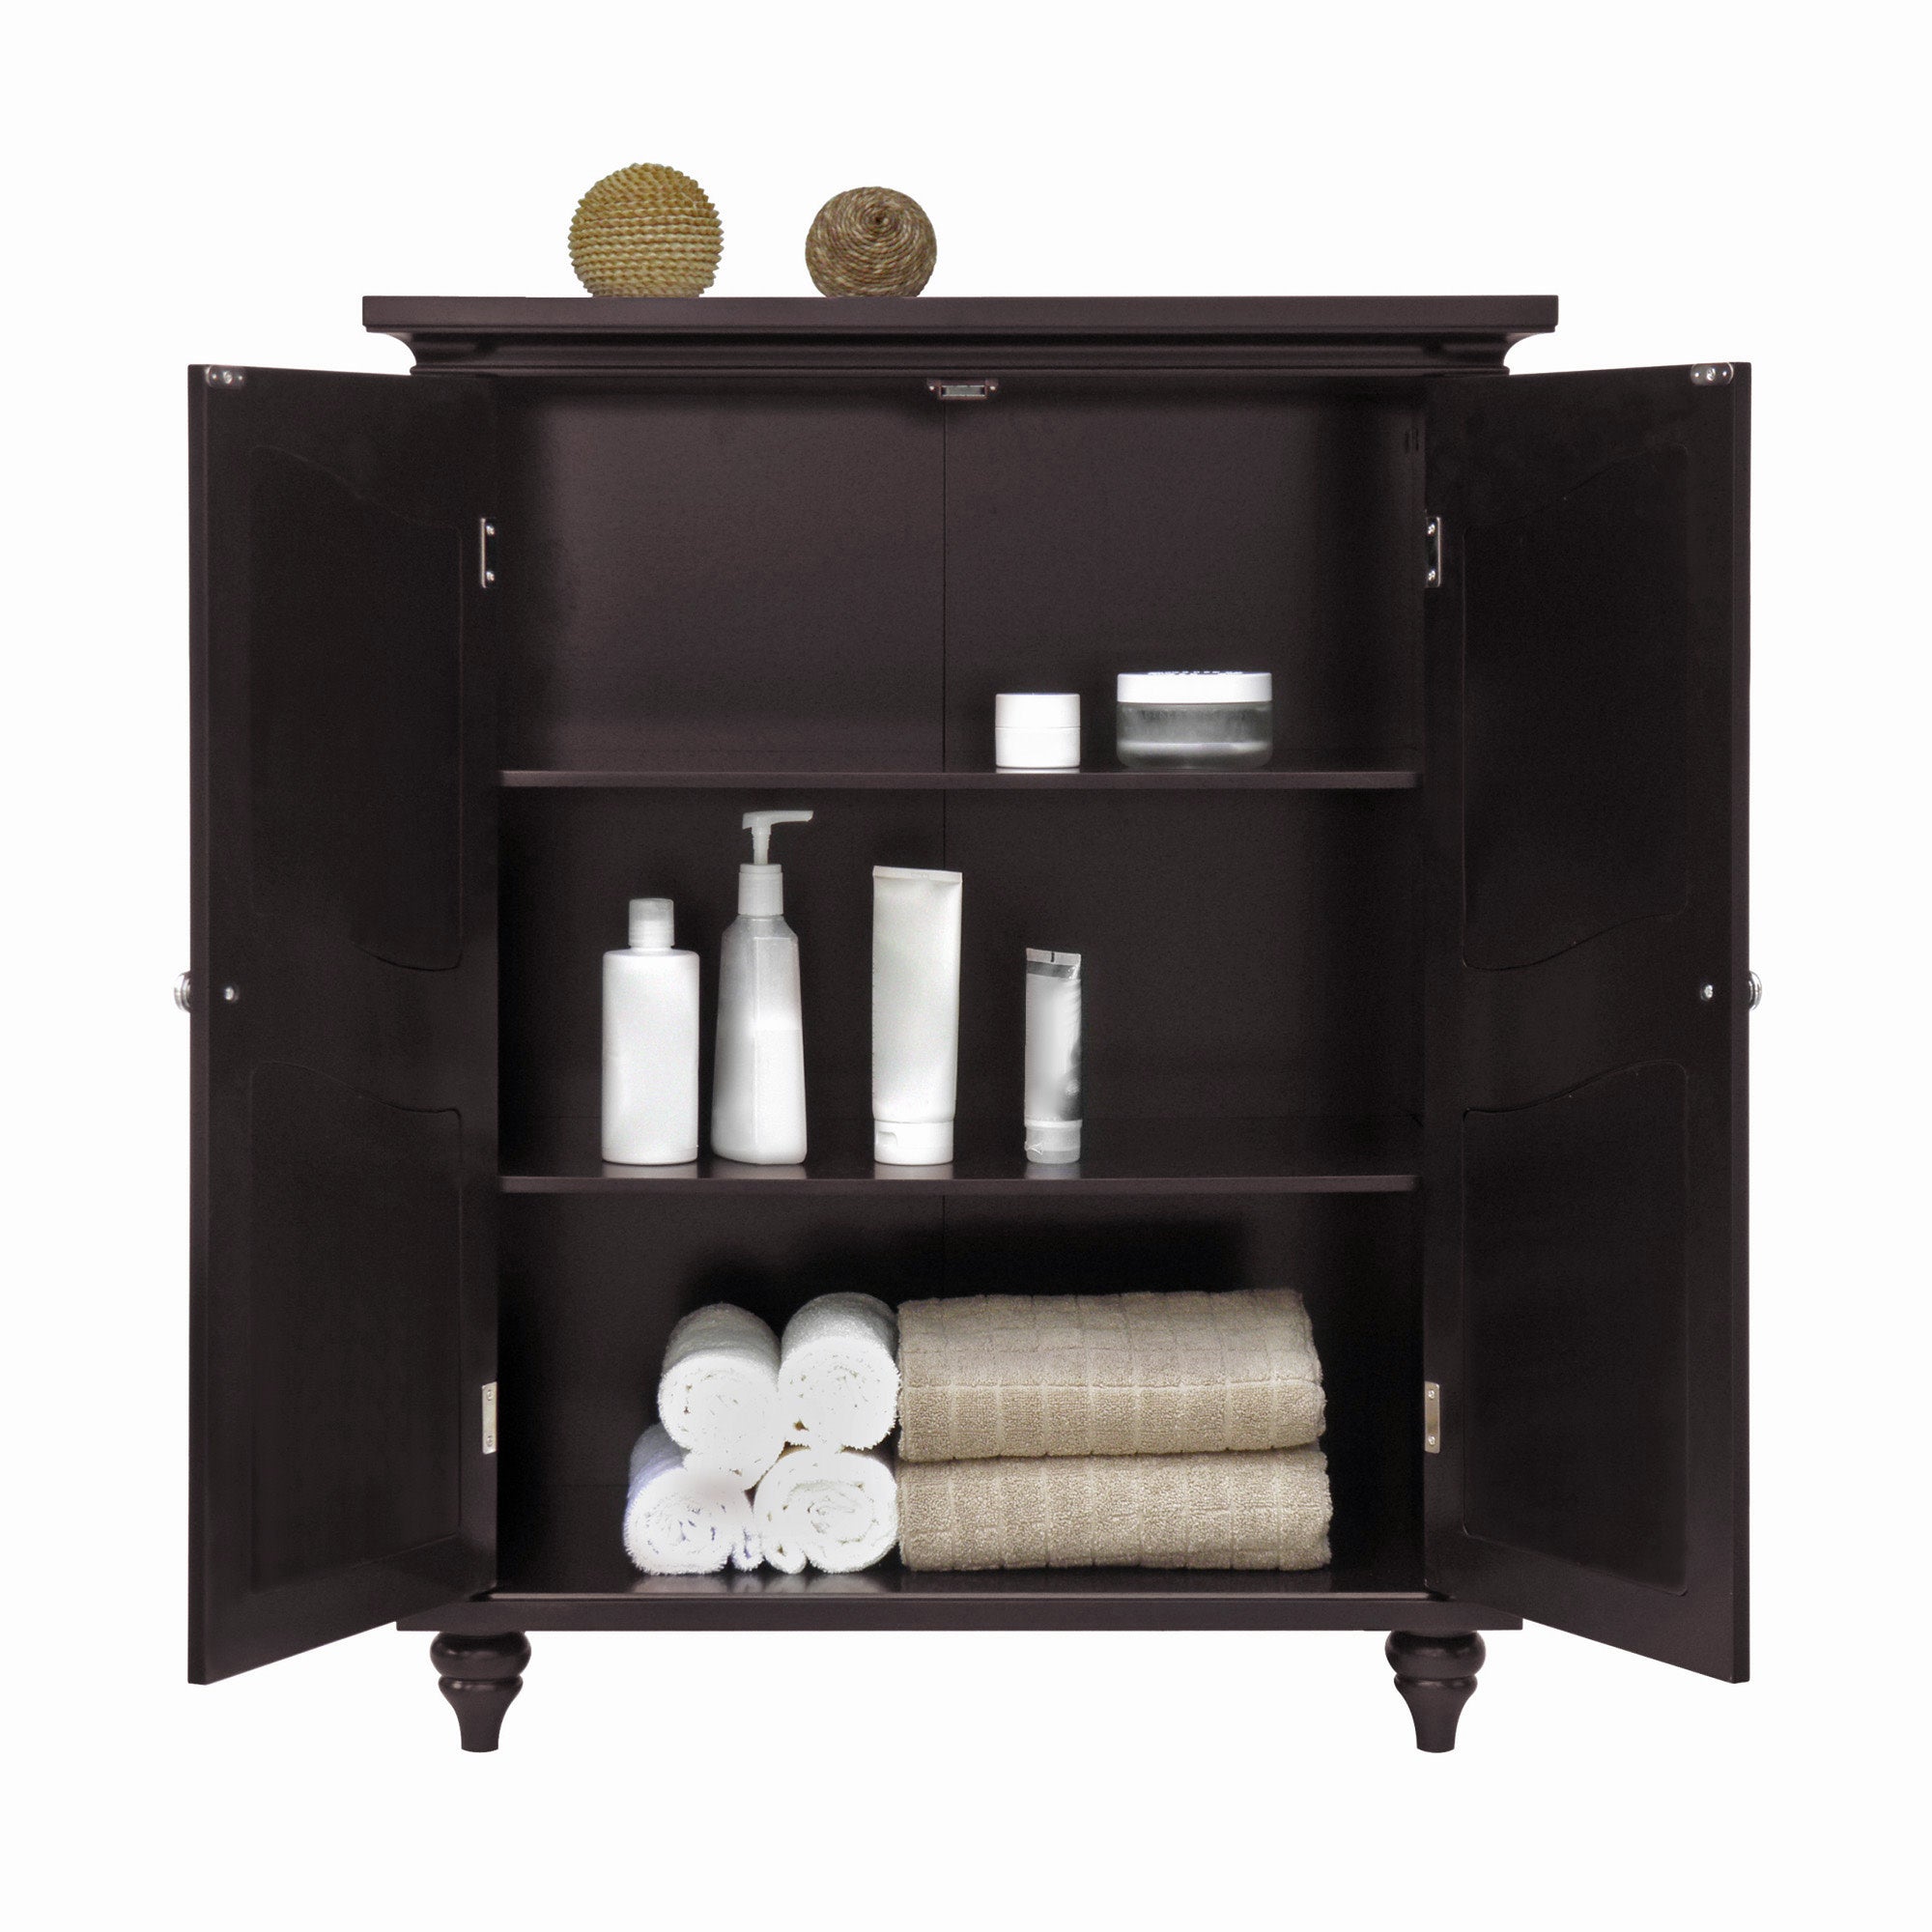 Teamson Home Versailles Wooden Floor Cabinet with 2 Shelves, Dark Espresso